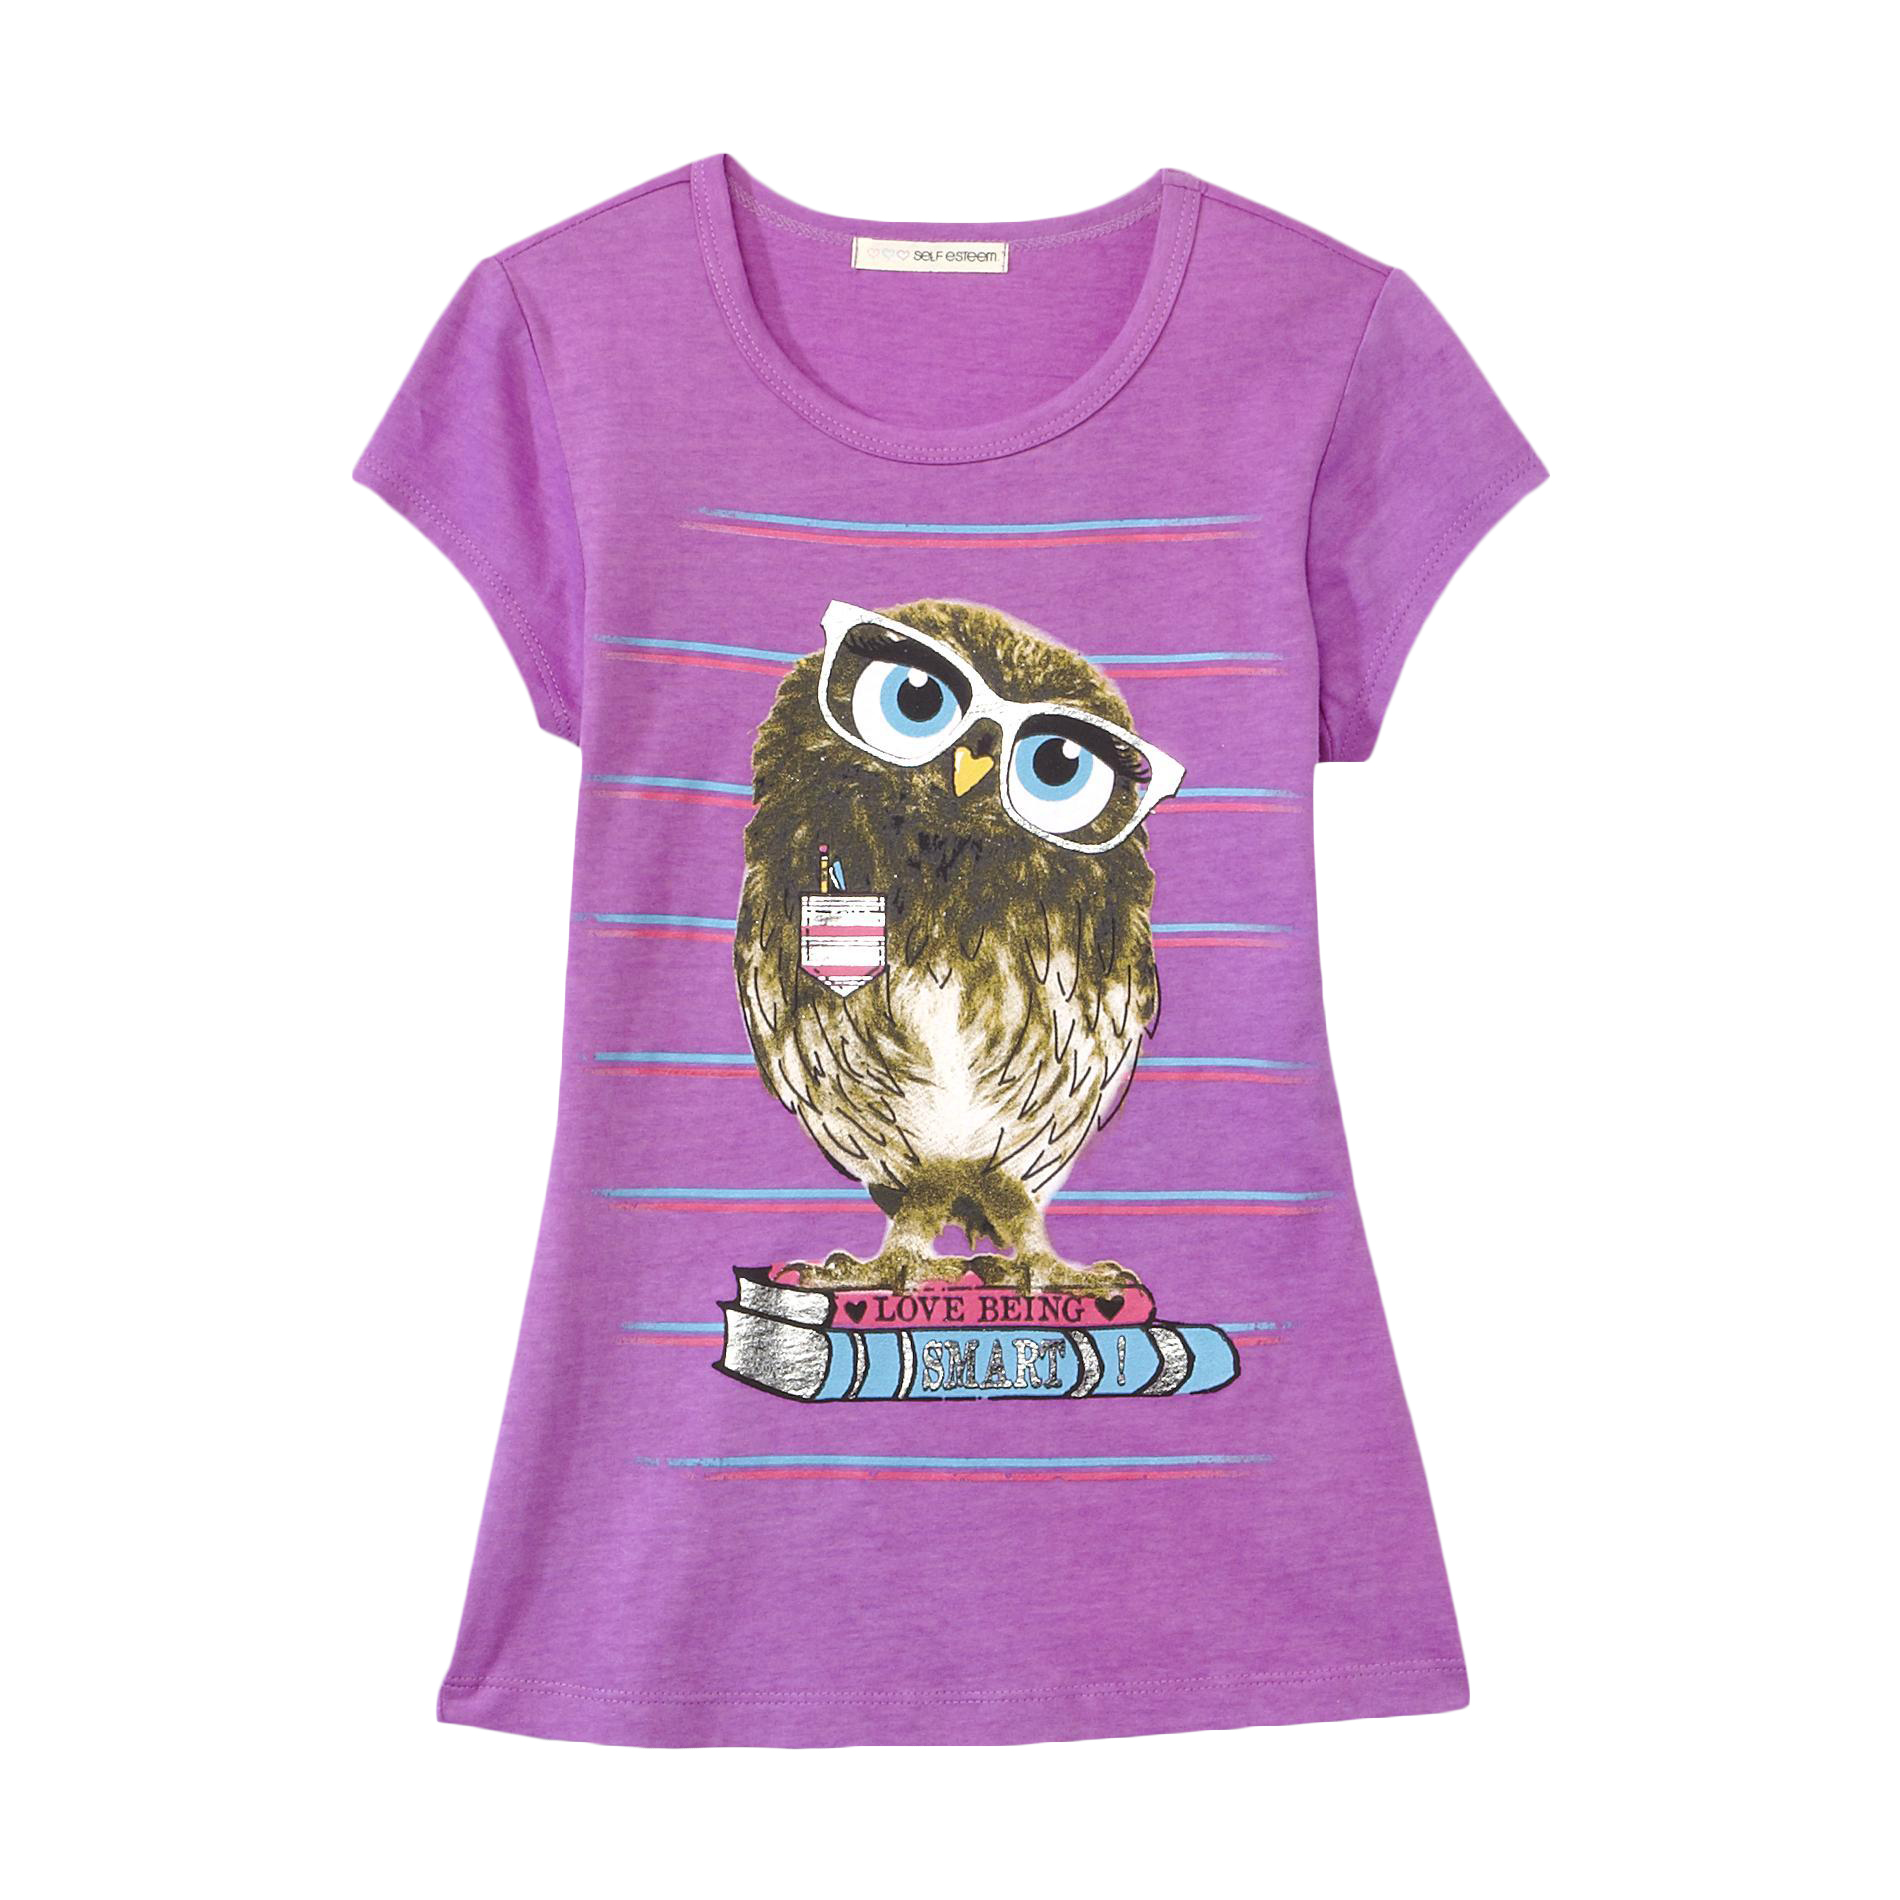 Self Esteem Girl's Graphic T-Shirt - Owl & Love Being Smart